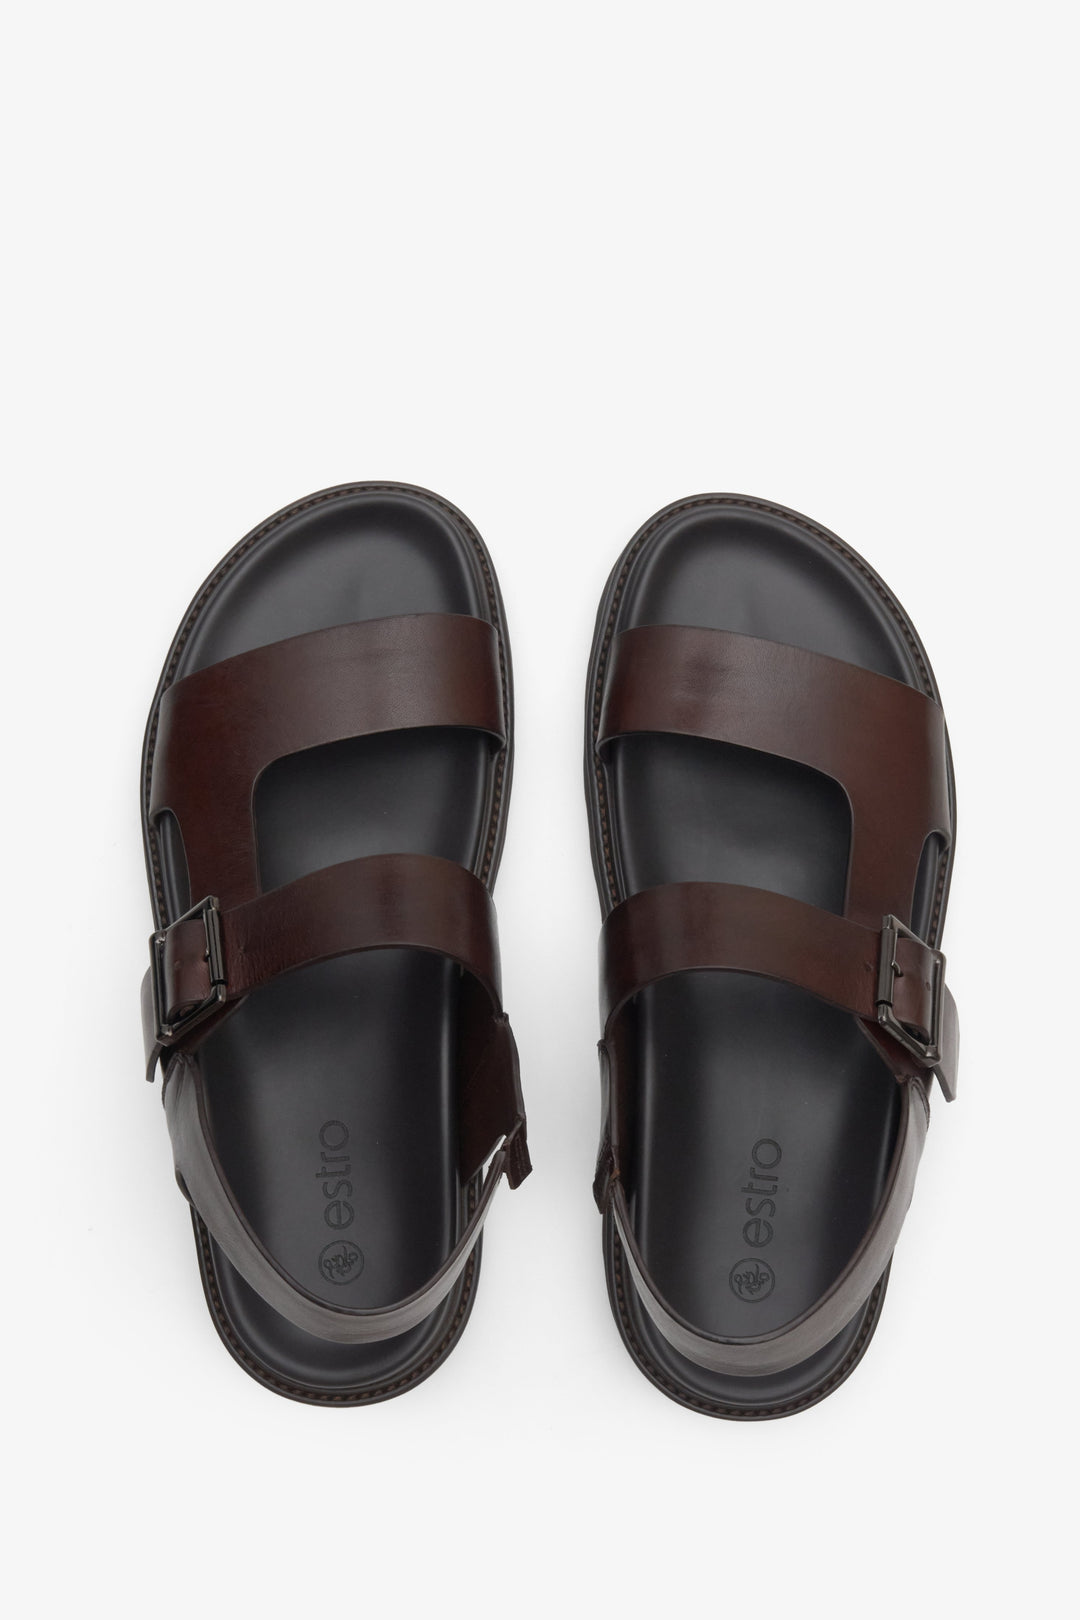 Men's genuine leather sandals made in saddle brown, Estro brand - presentation form above.